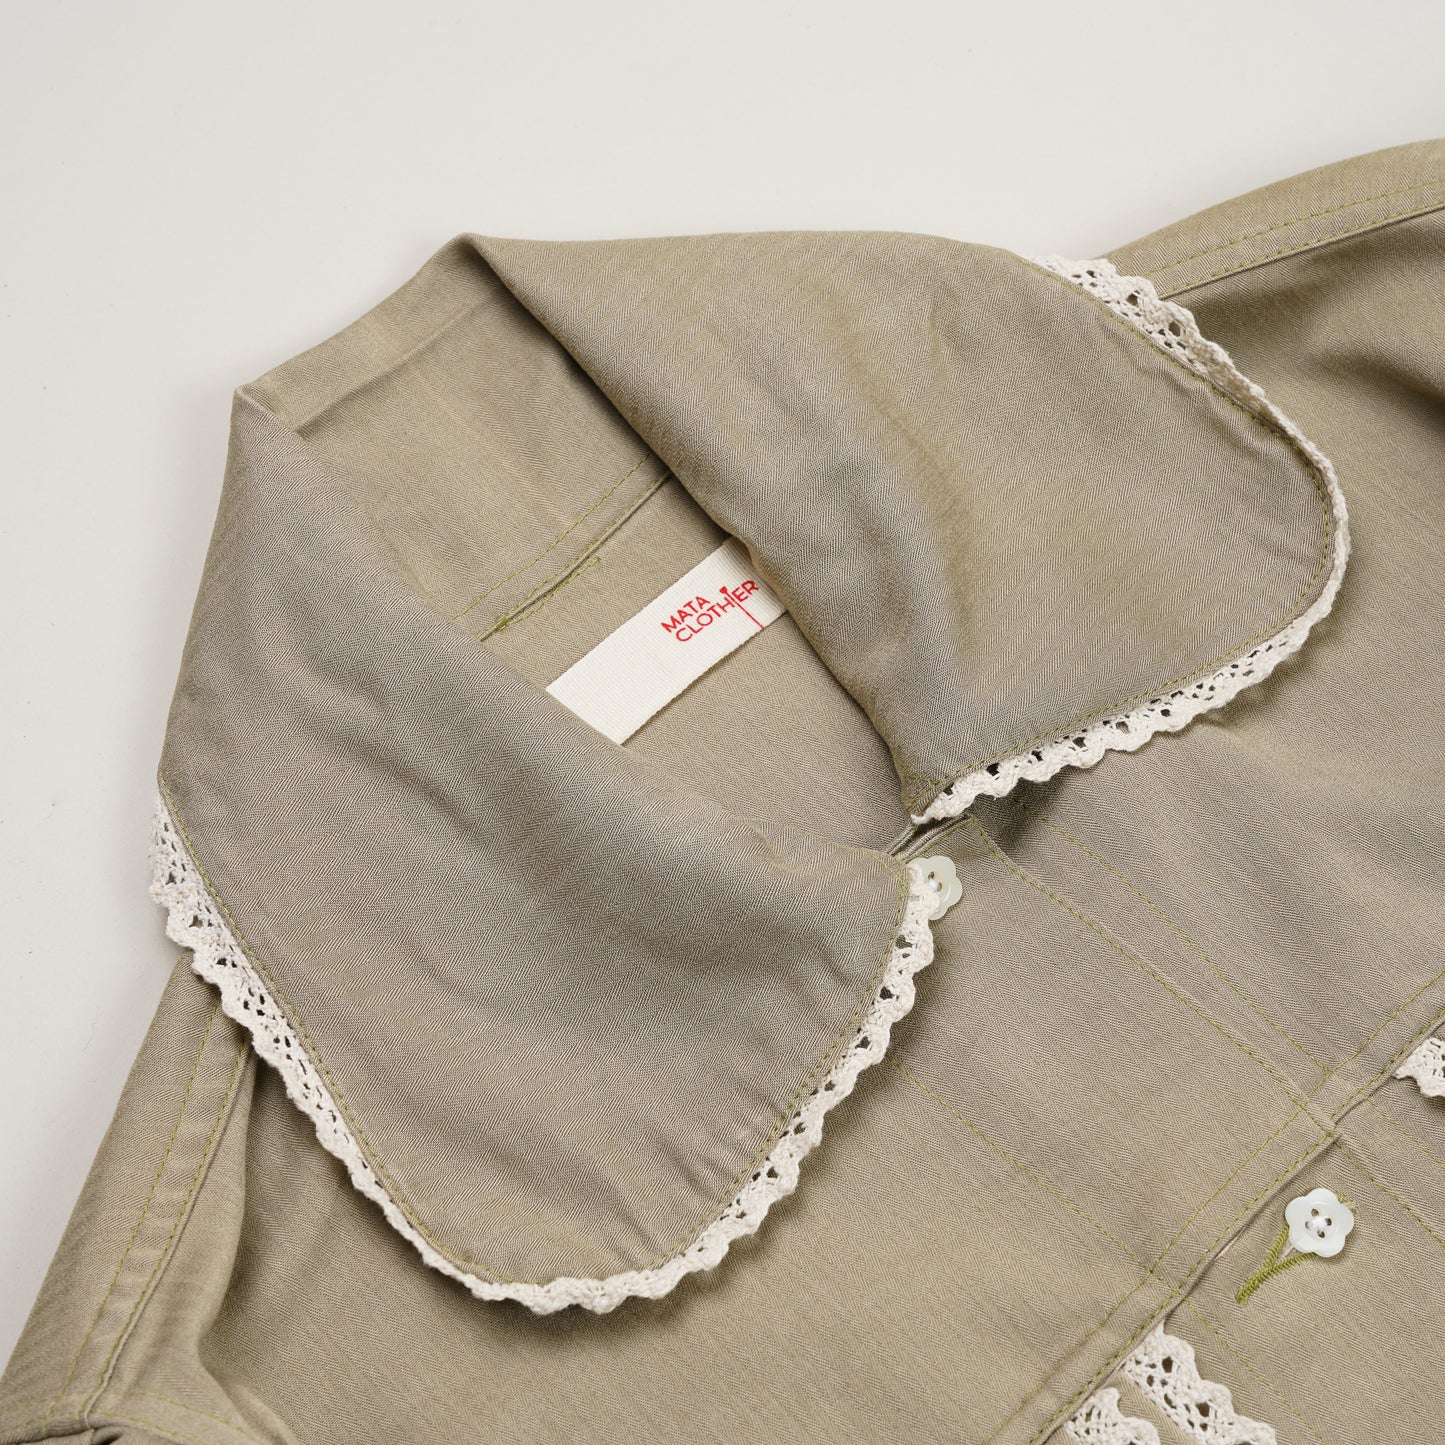 Emiria Jacket Tentra  ✺ MATA CLOTHiER